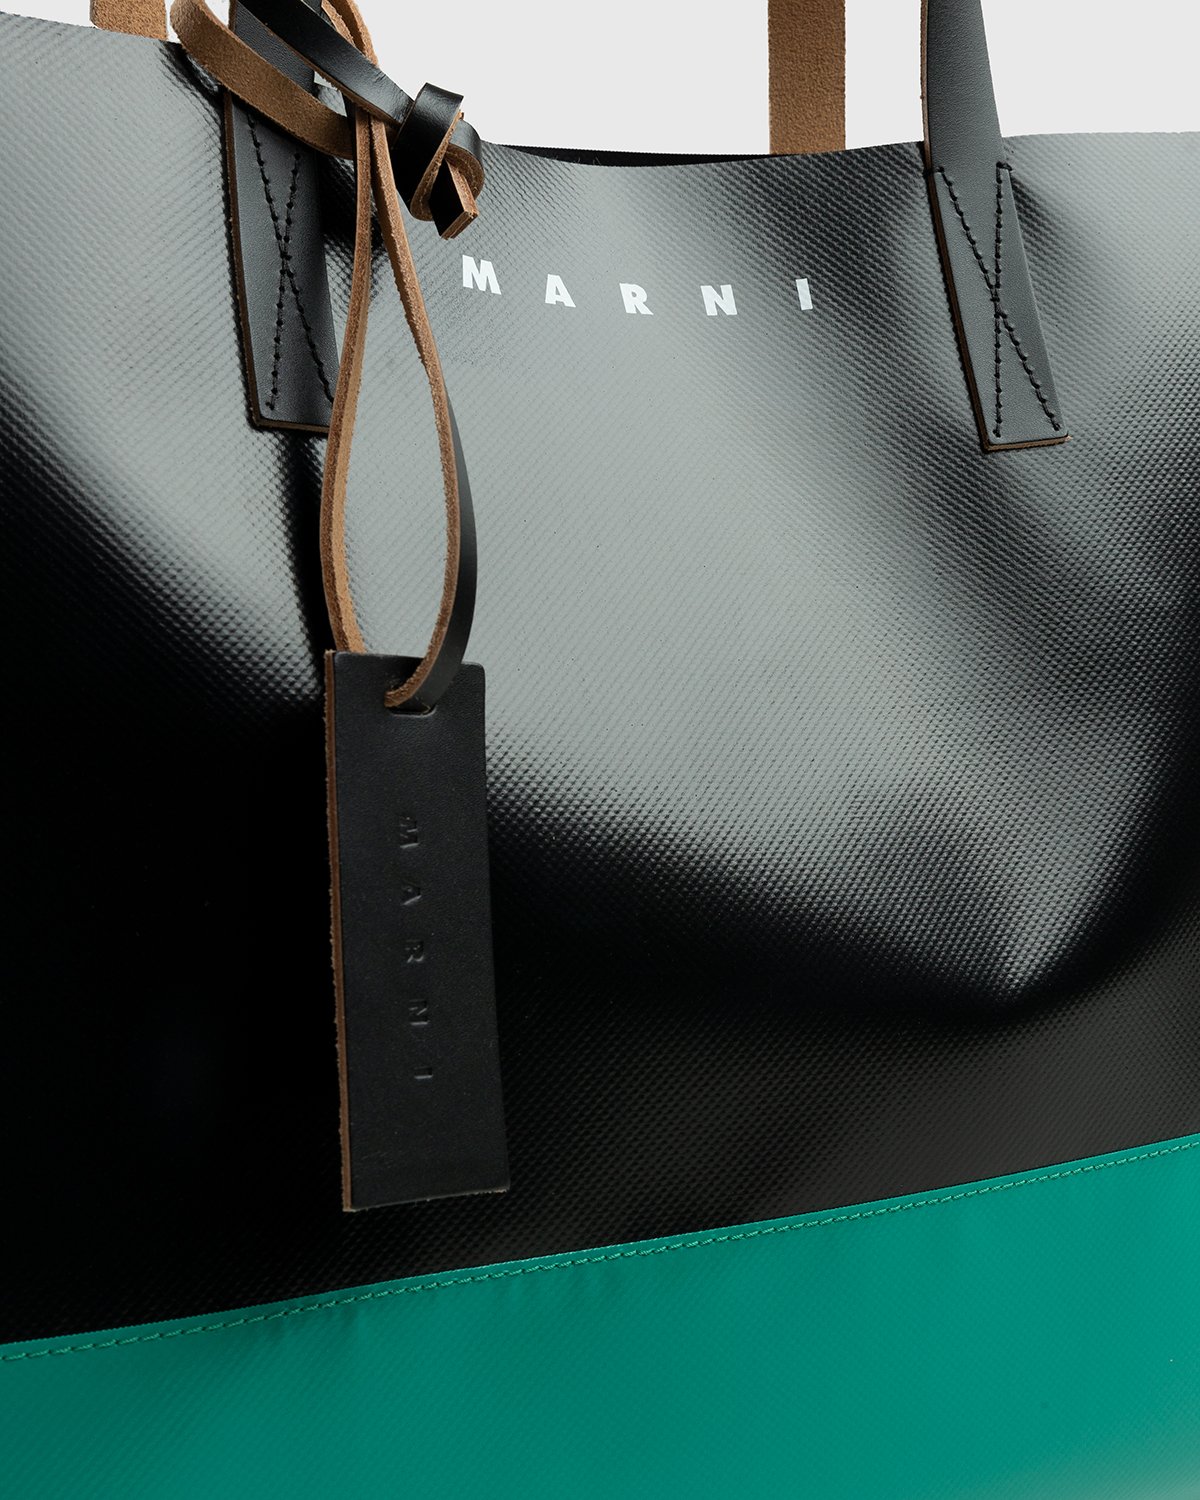 Marni - Tribeca Two-Tone Tote Bag Black/Green - Accessories - Black - Image 6